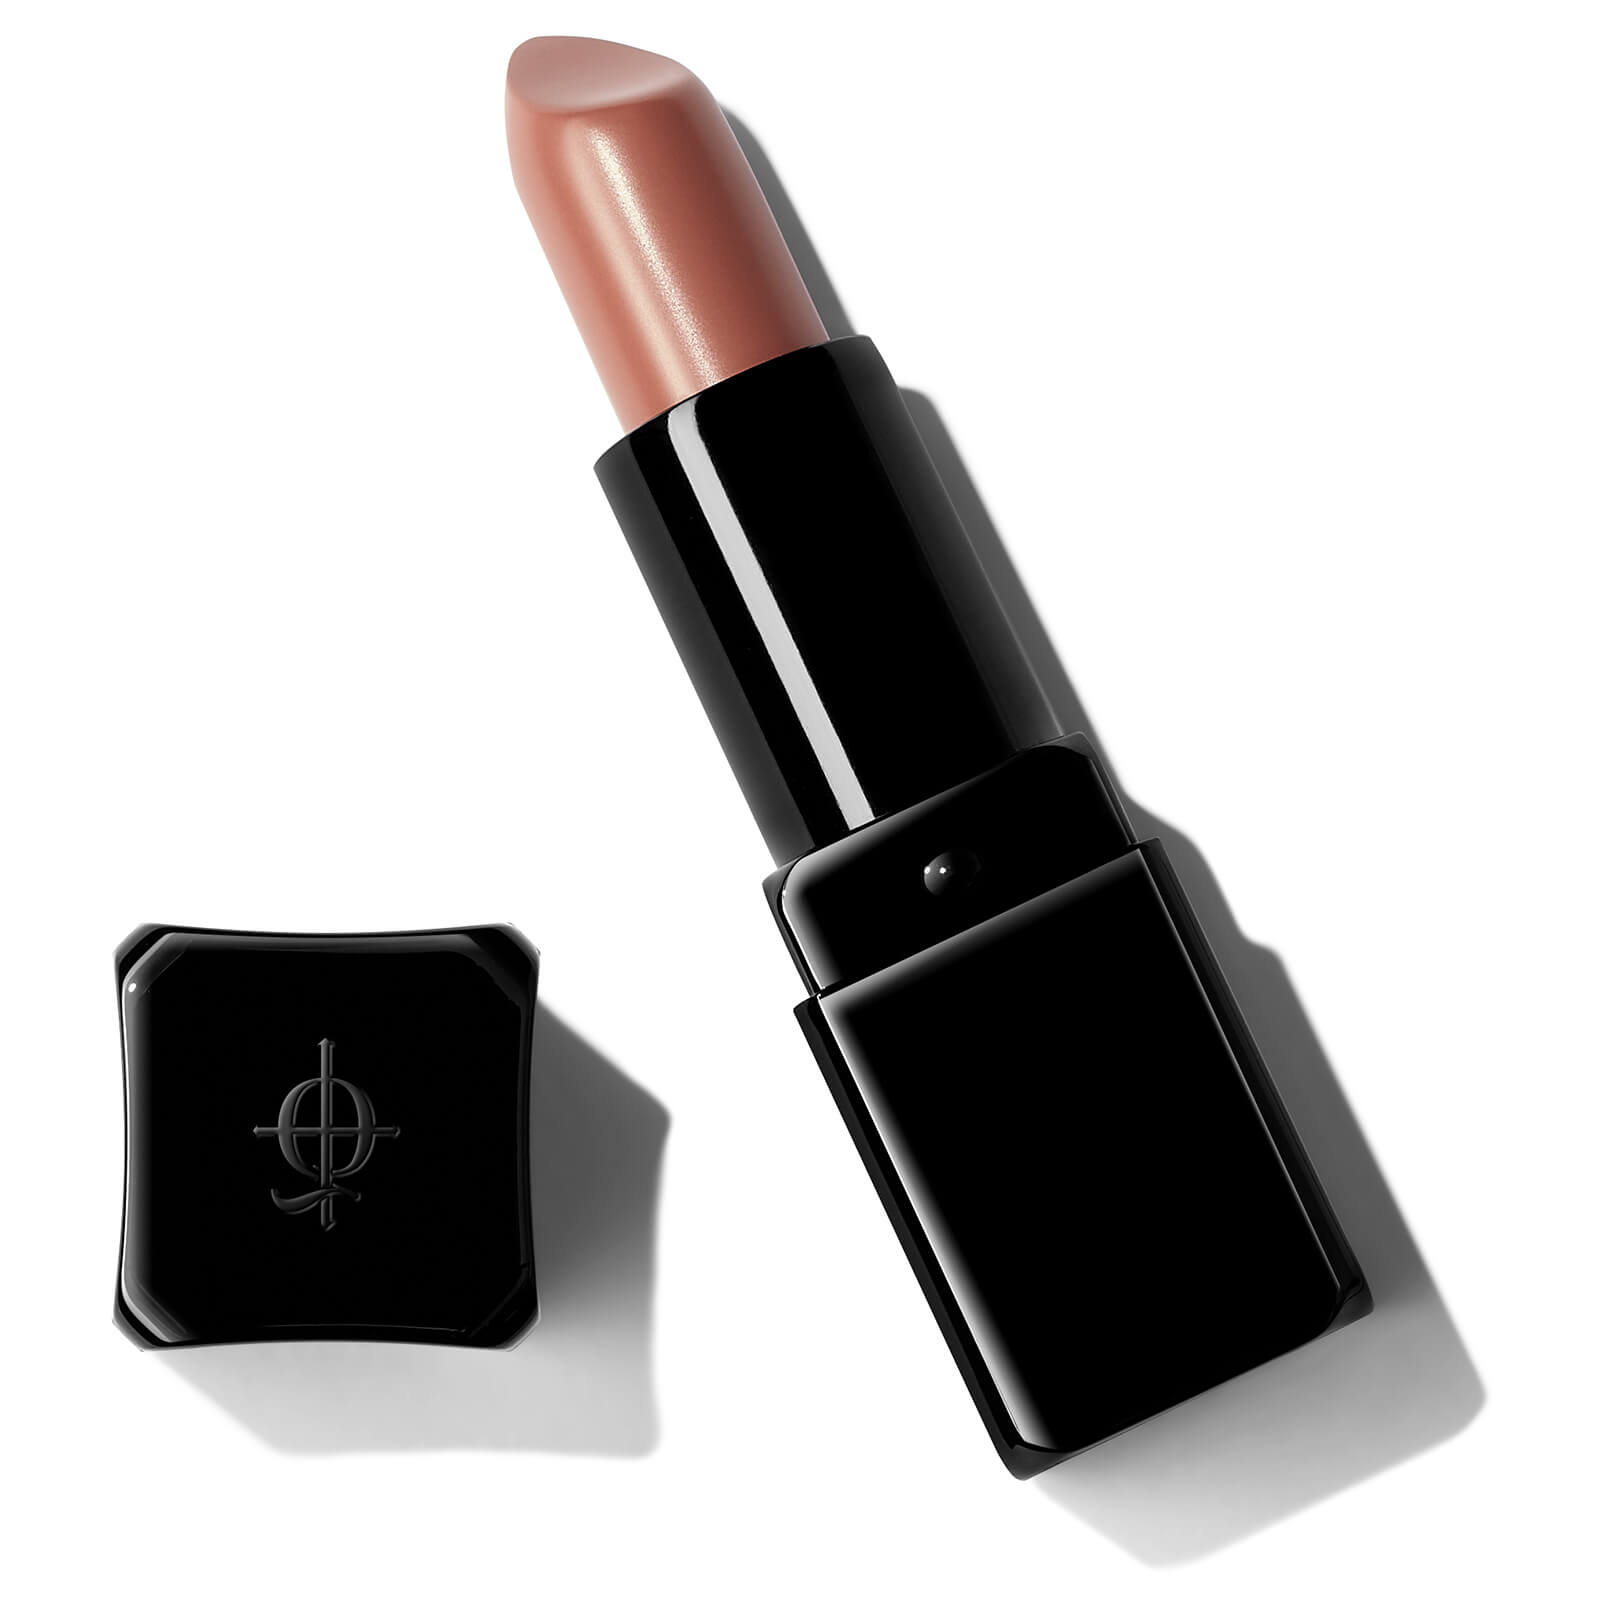 Illamasqua Antimatter Lipstick (Various Shades) - Seren